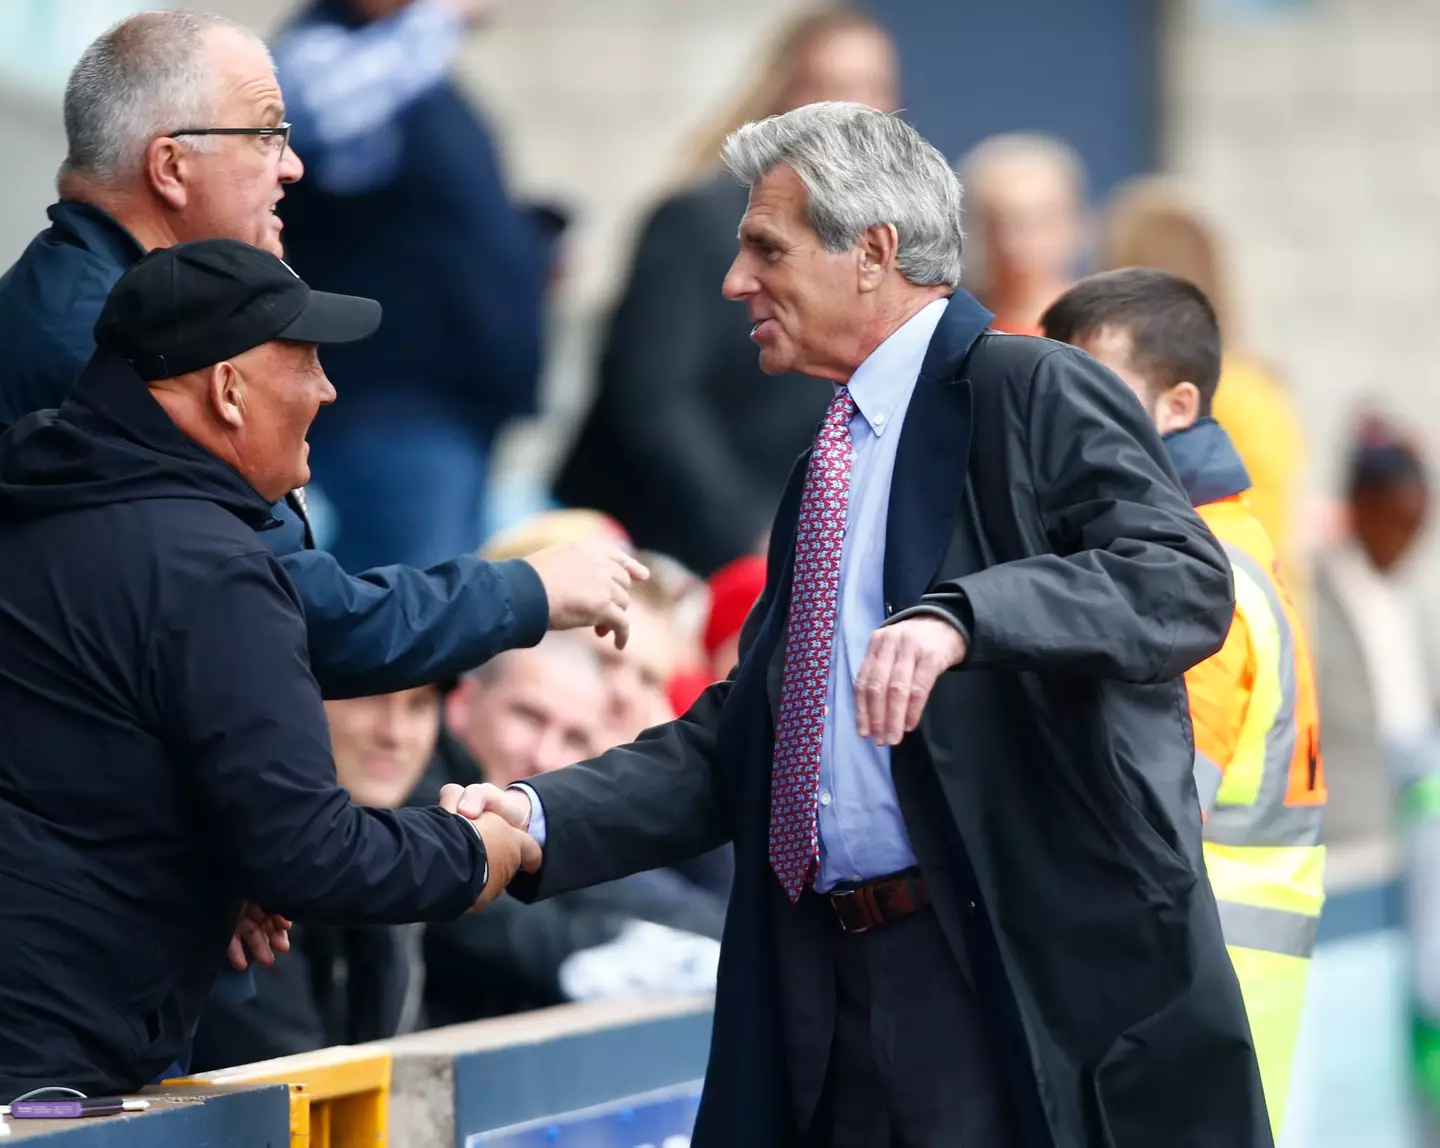 John Berylson shakes hands with a Millwall fan. Image: Getty